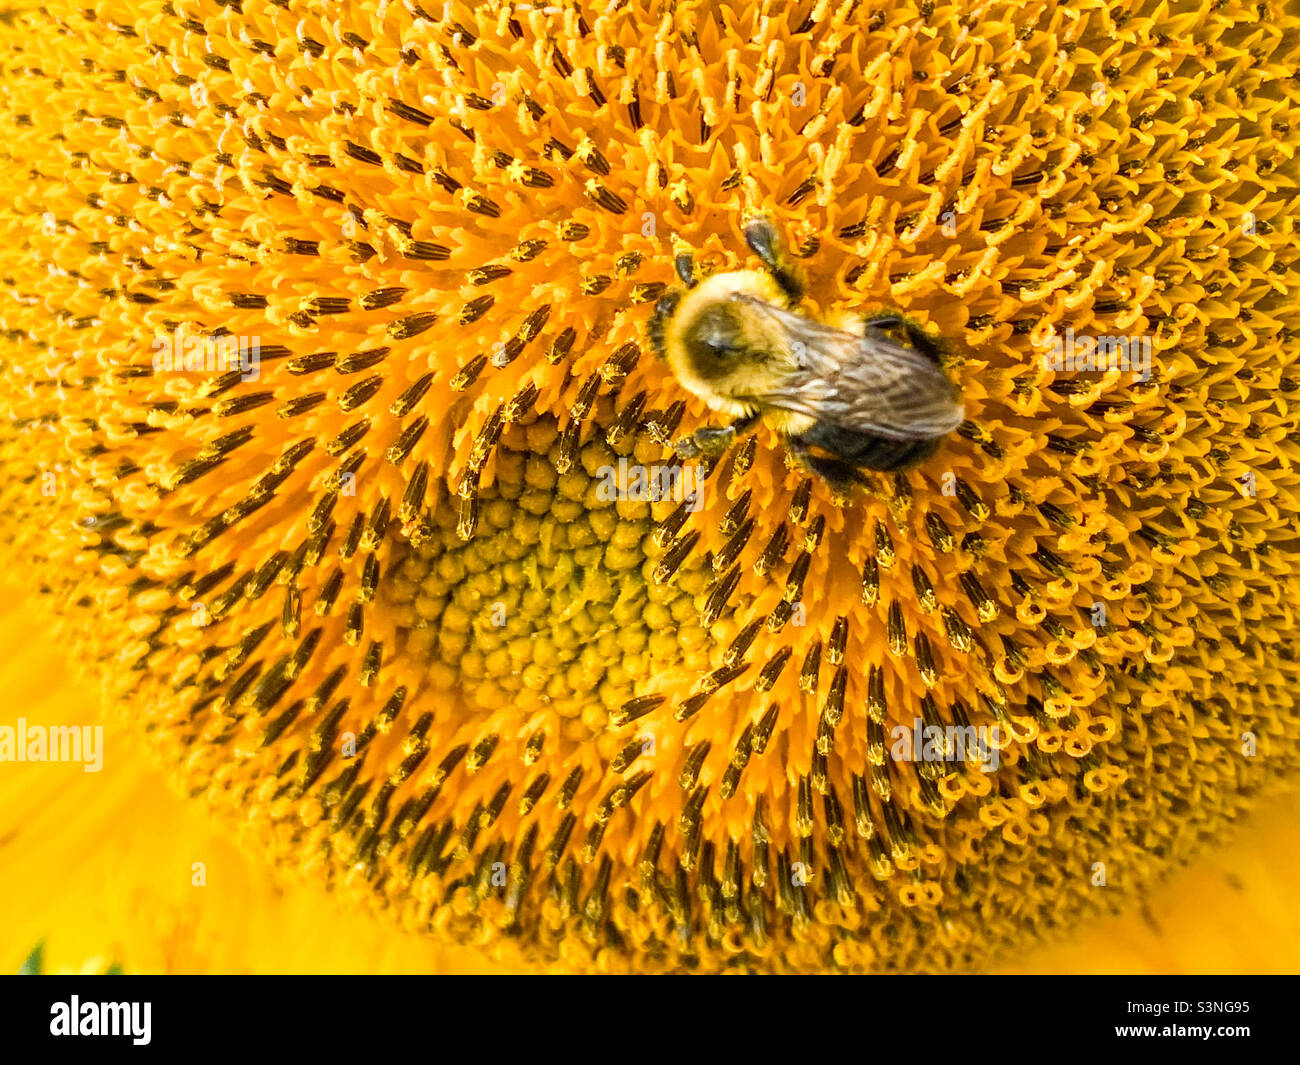 Bee close up on sunflower Stock Photo